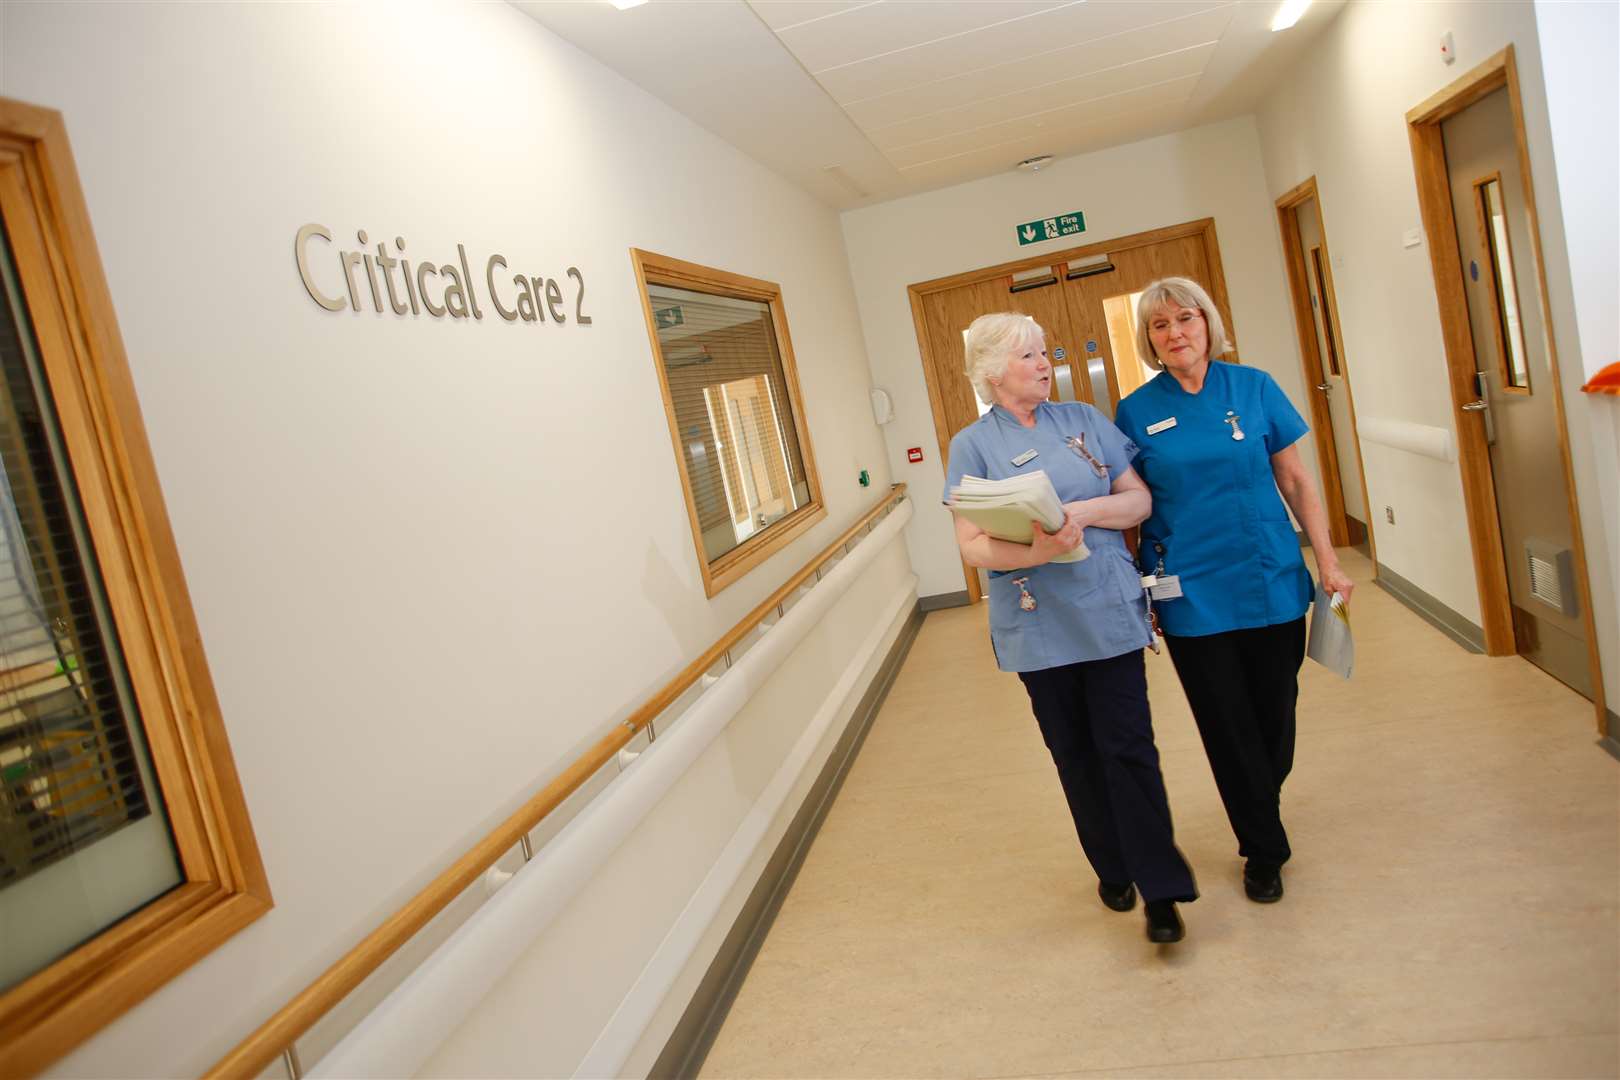 Health care assistant Janet Lindsay, left, and staff nurse Kay Sharp at KIMS Hospital, Maidstone